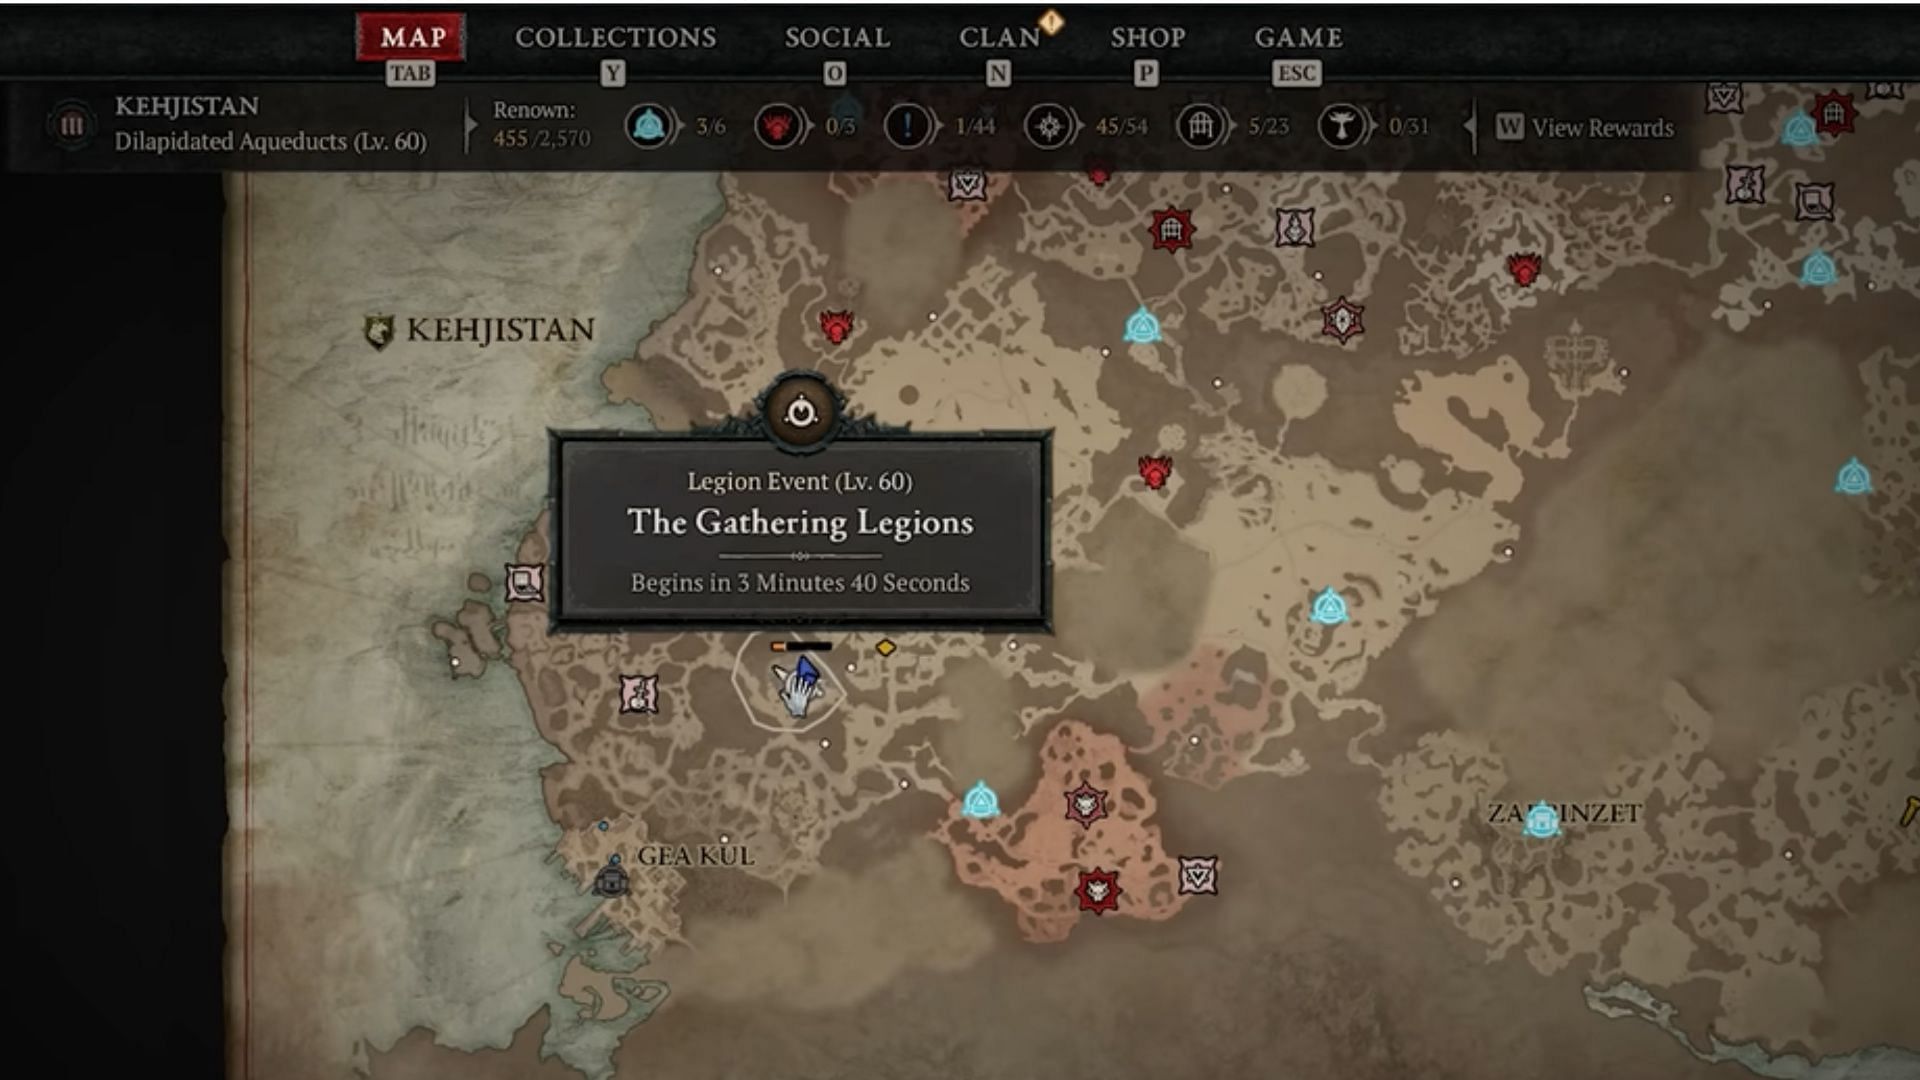 Legion Event periodically occurs across the map (Image via Blizzard Entertainment)